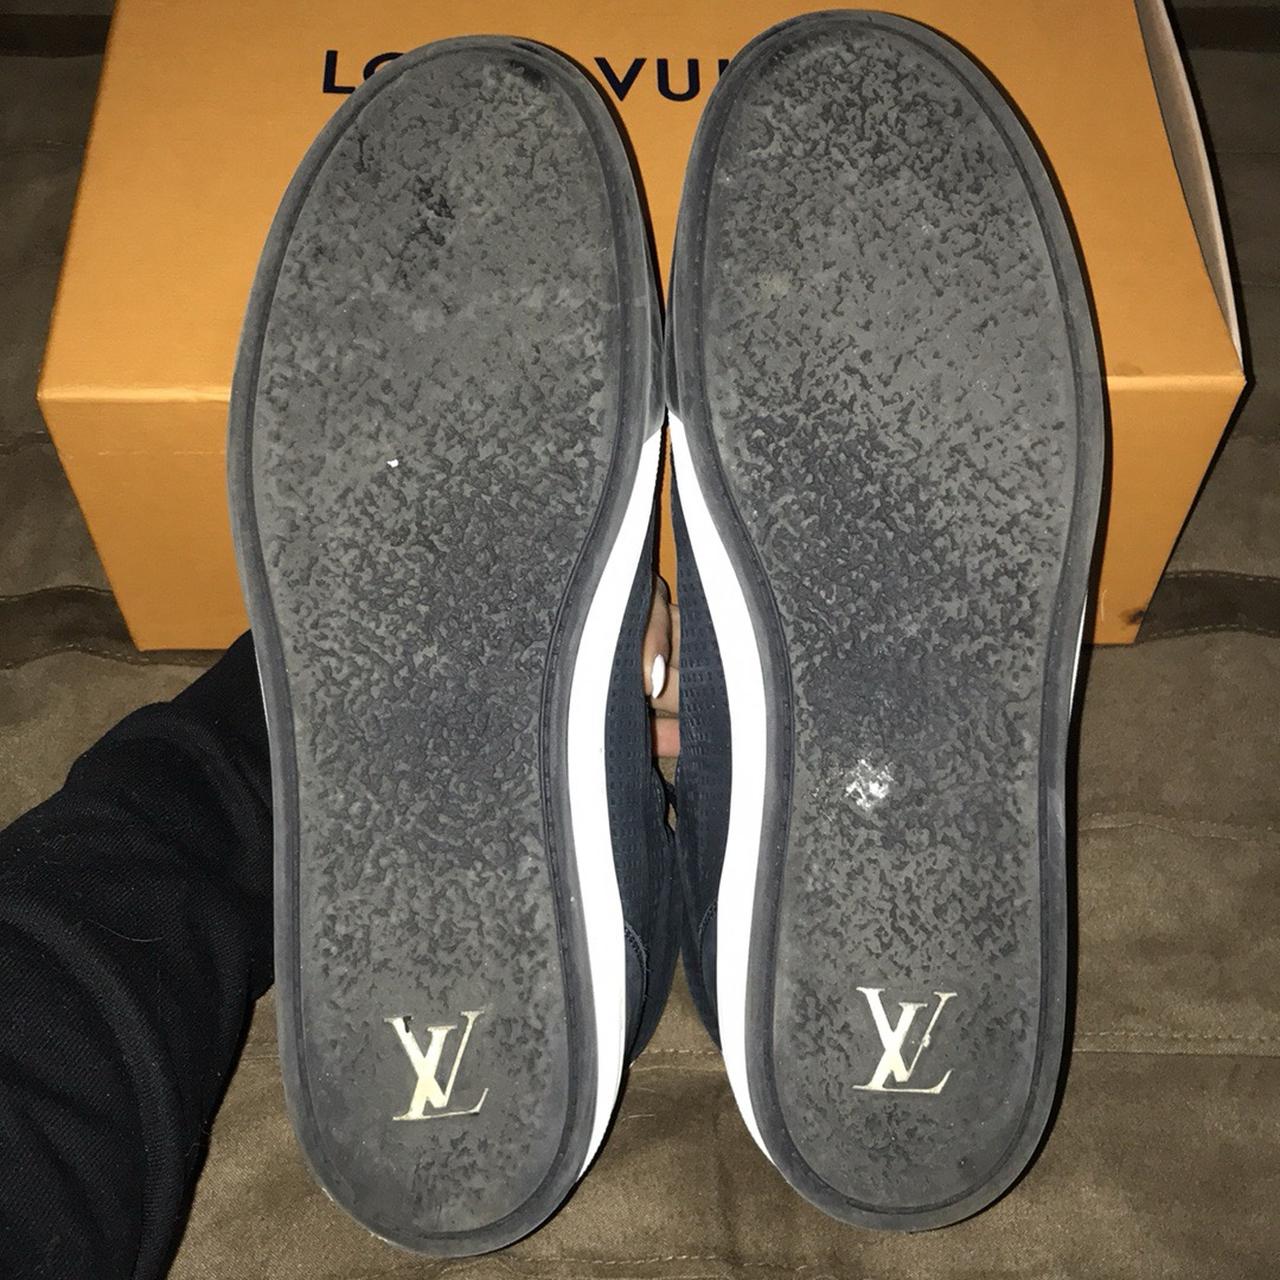 Louis Vuitton High Top Sneakers Size 10.5 Fits - Depop